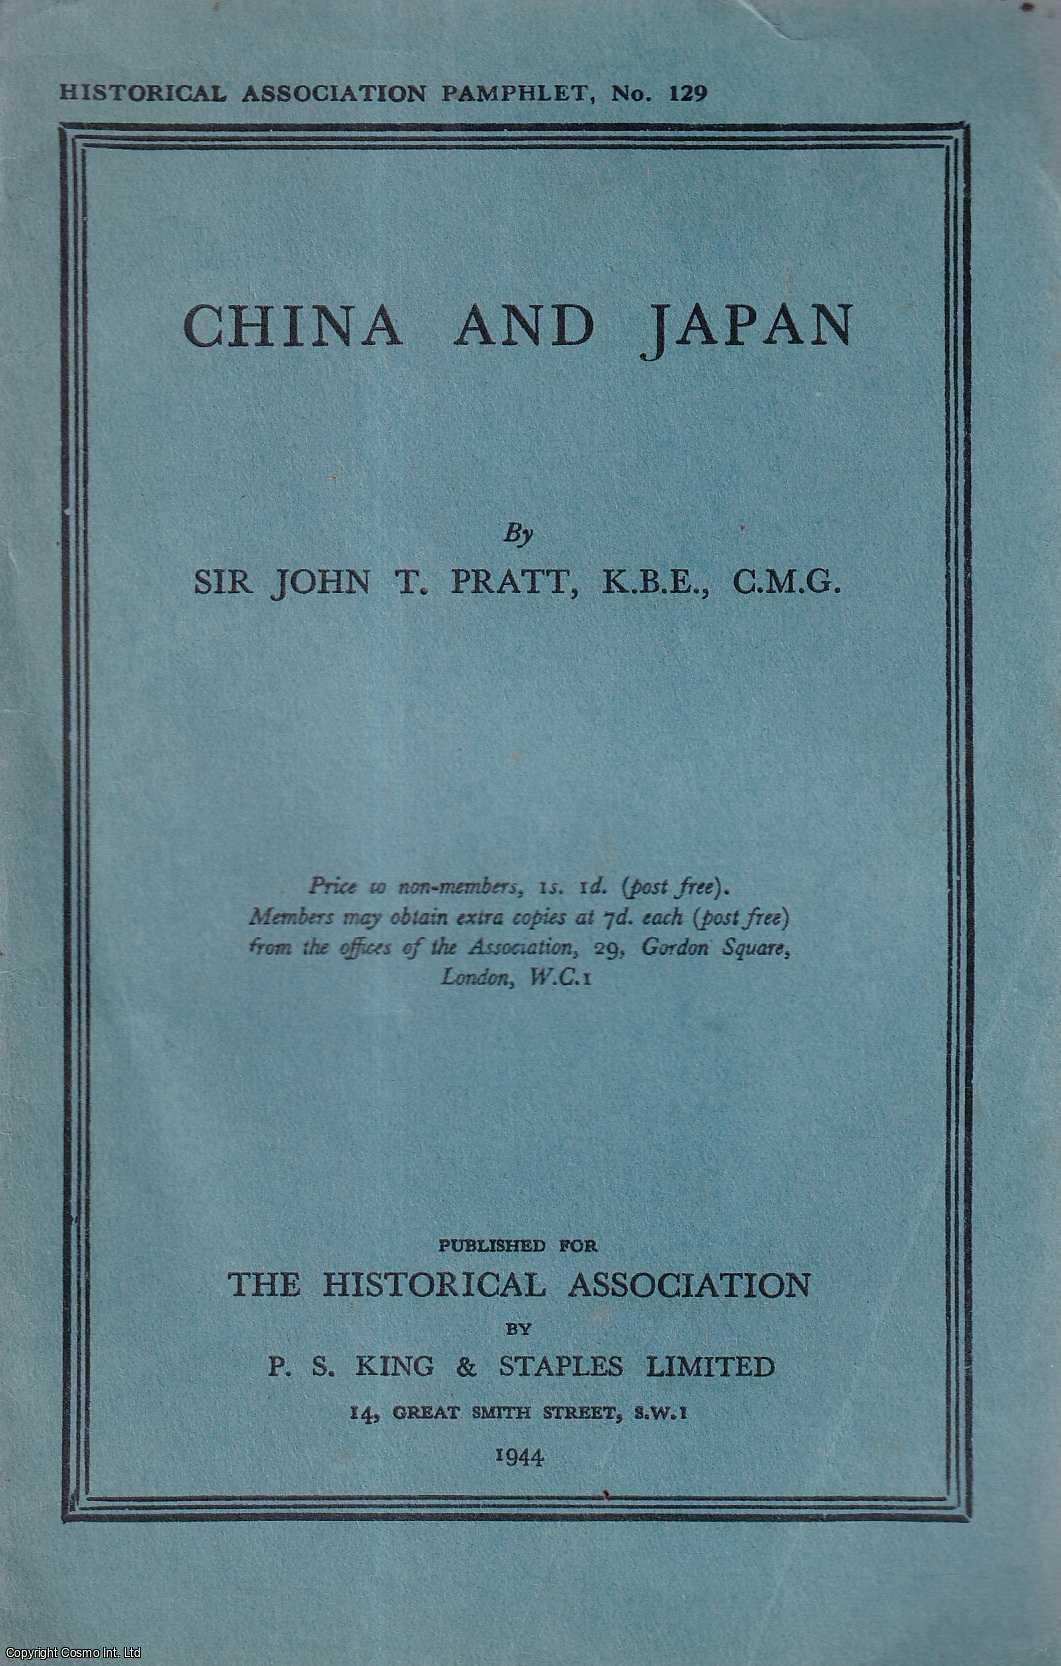 Sir John T. Pratt - China and Japan. Historical Association Pamphlet No. 129.